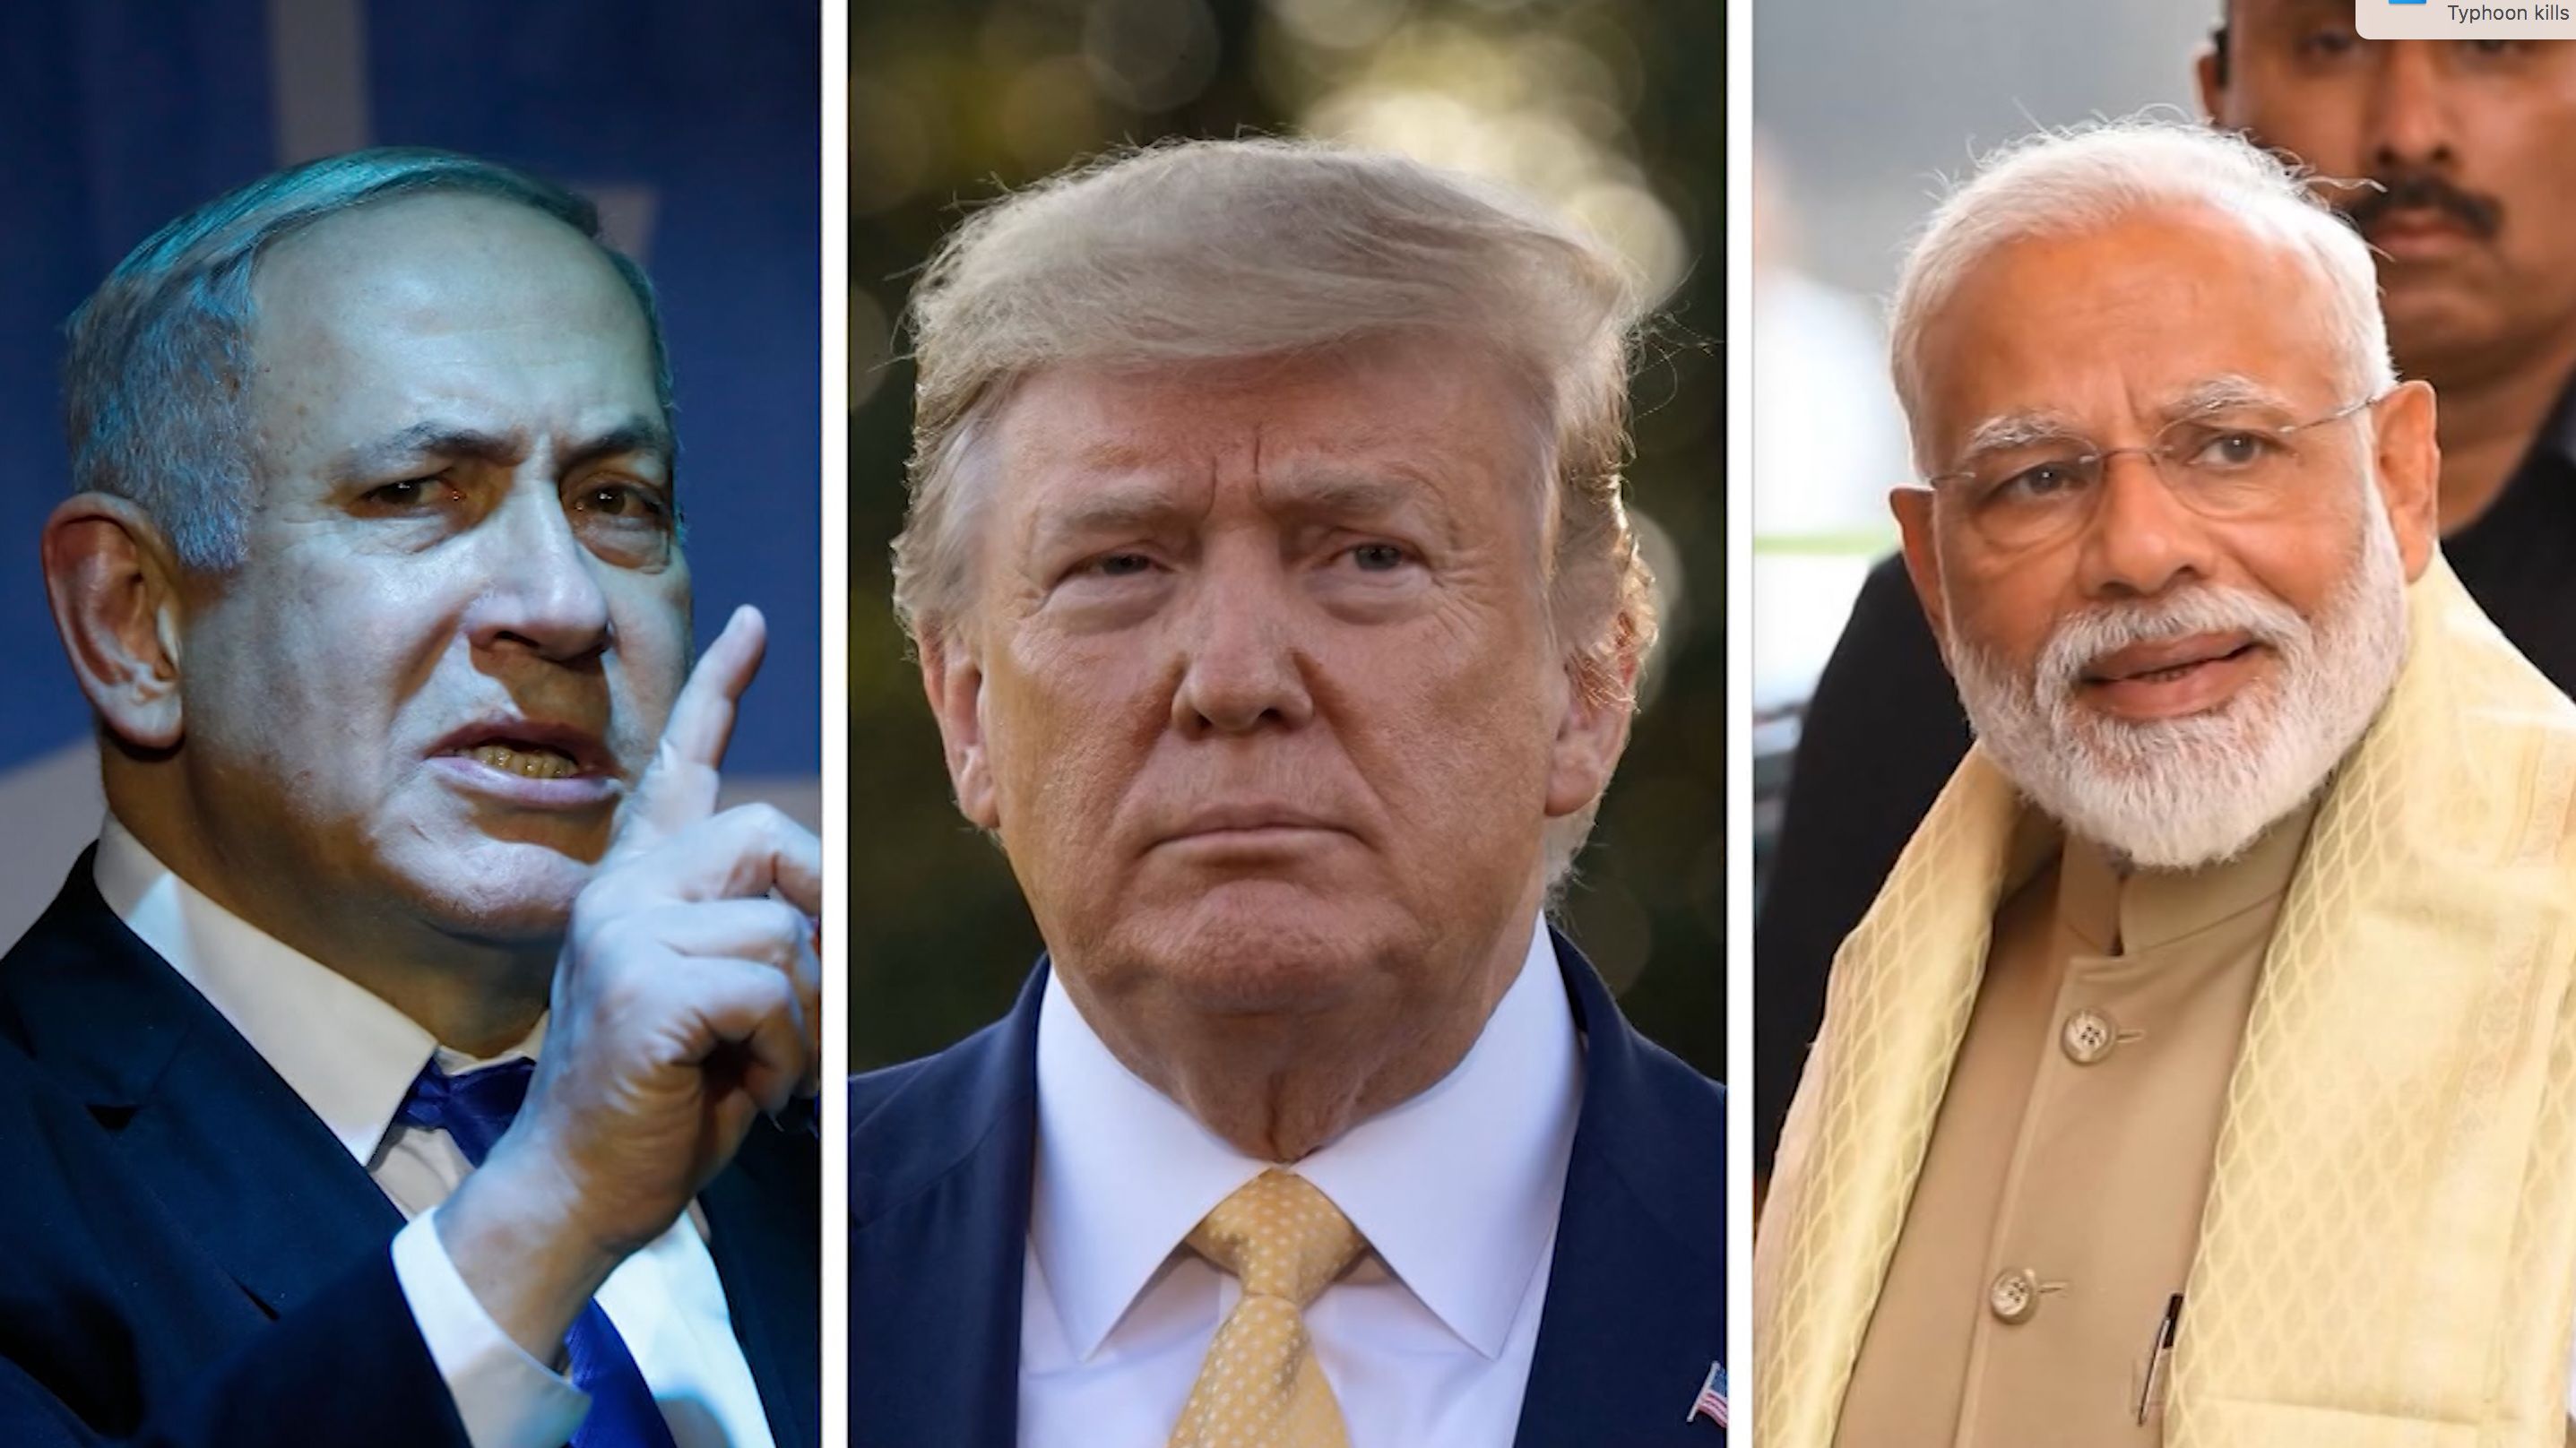 Buddies across borders: Trump, Netanyahu and Modi